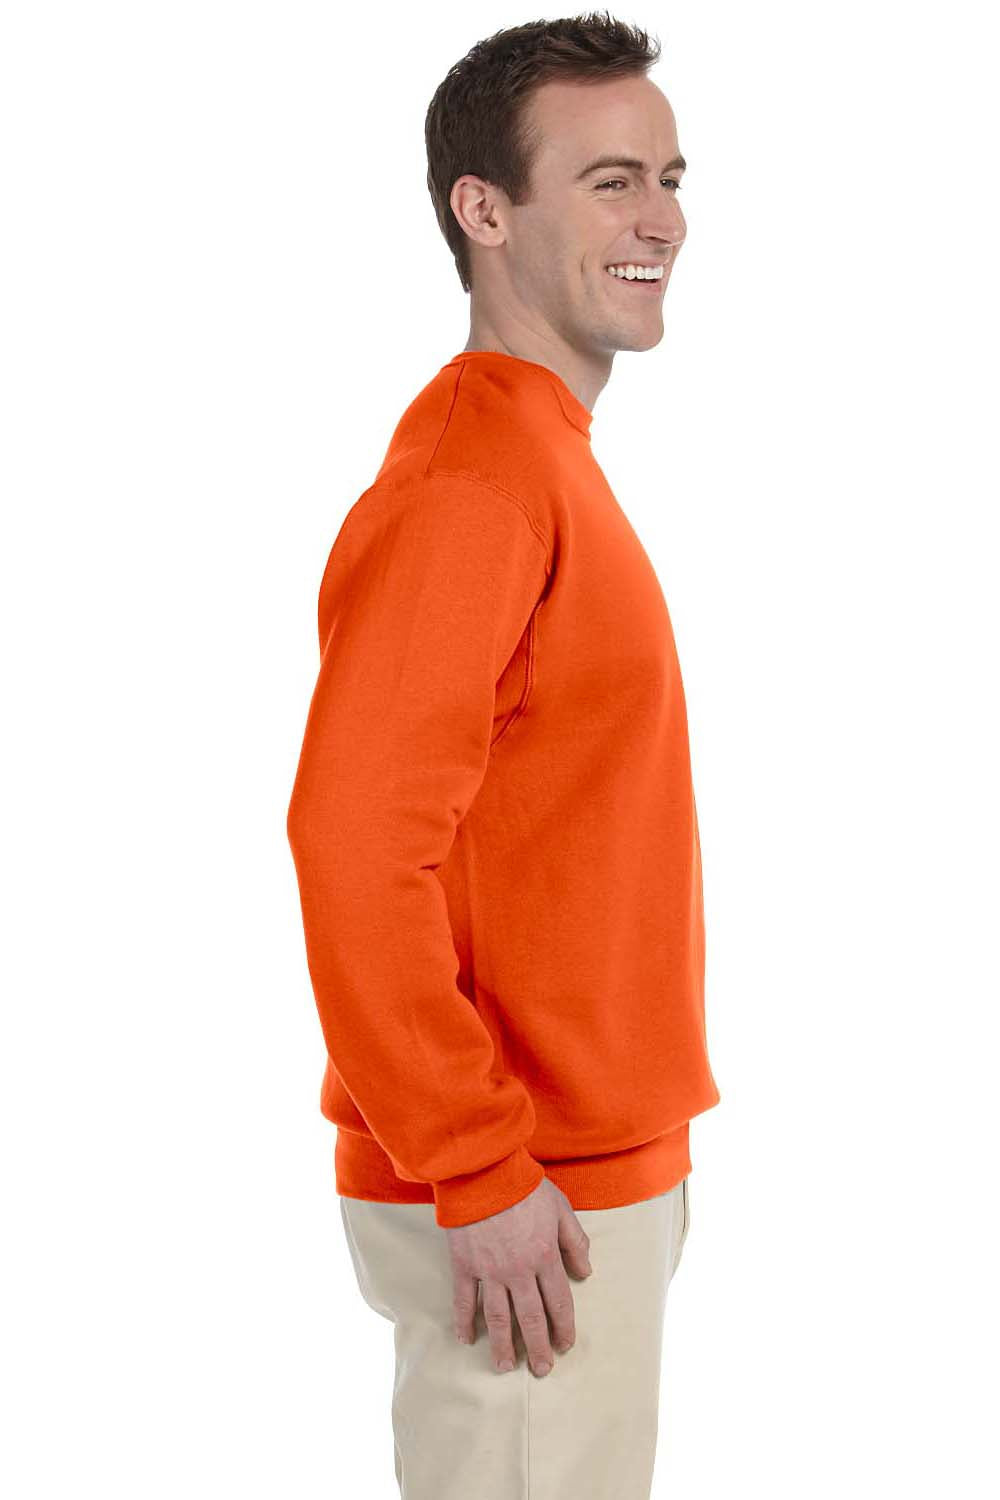 Jerzees 562 Mens NuBlend Fleece Crewneck Sweatshirt Safety Orange Side